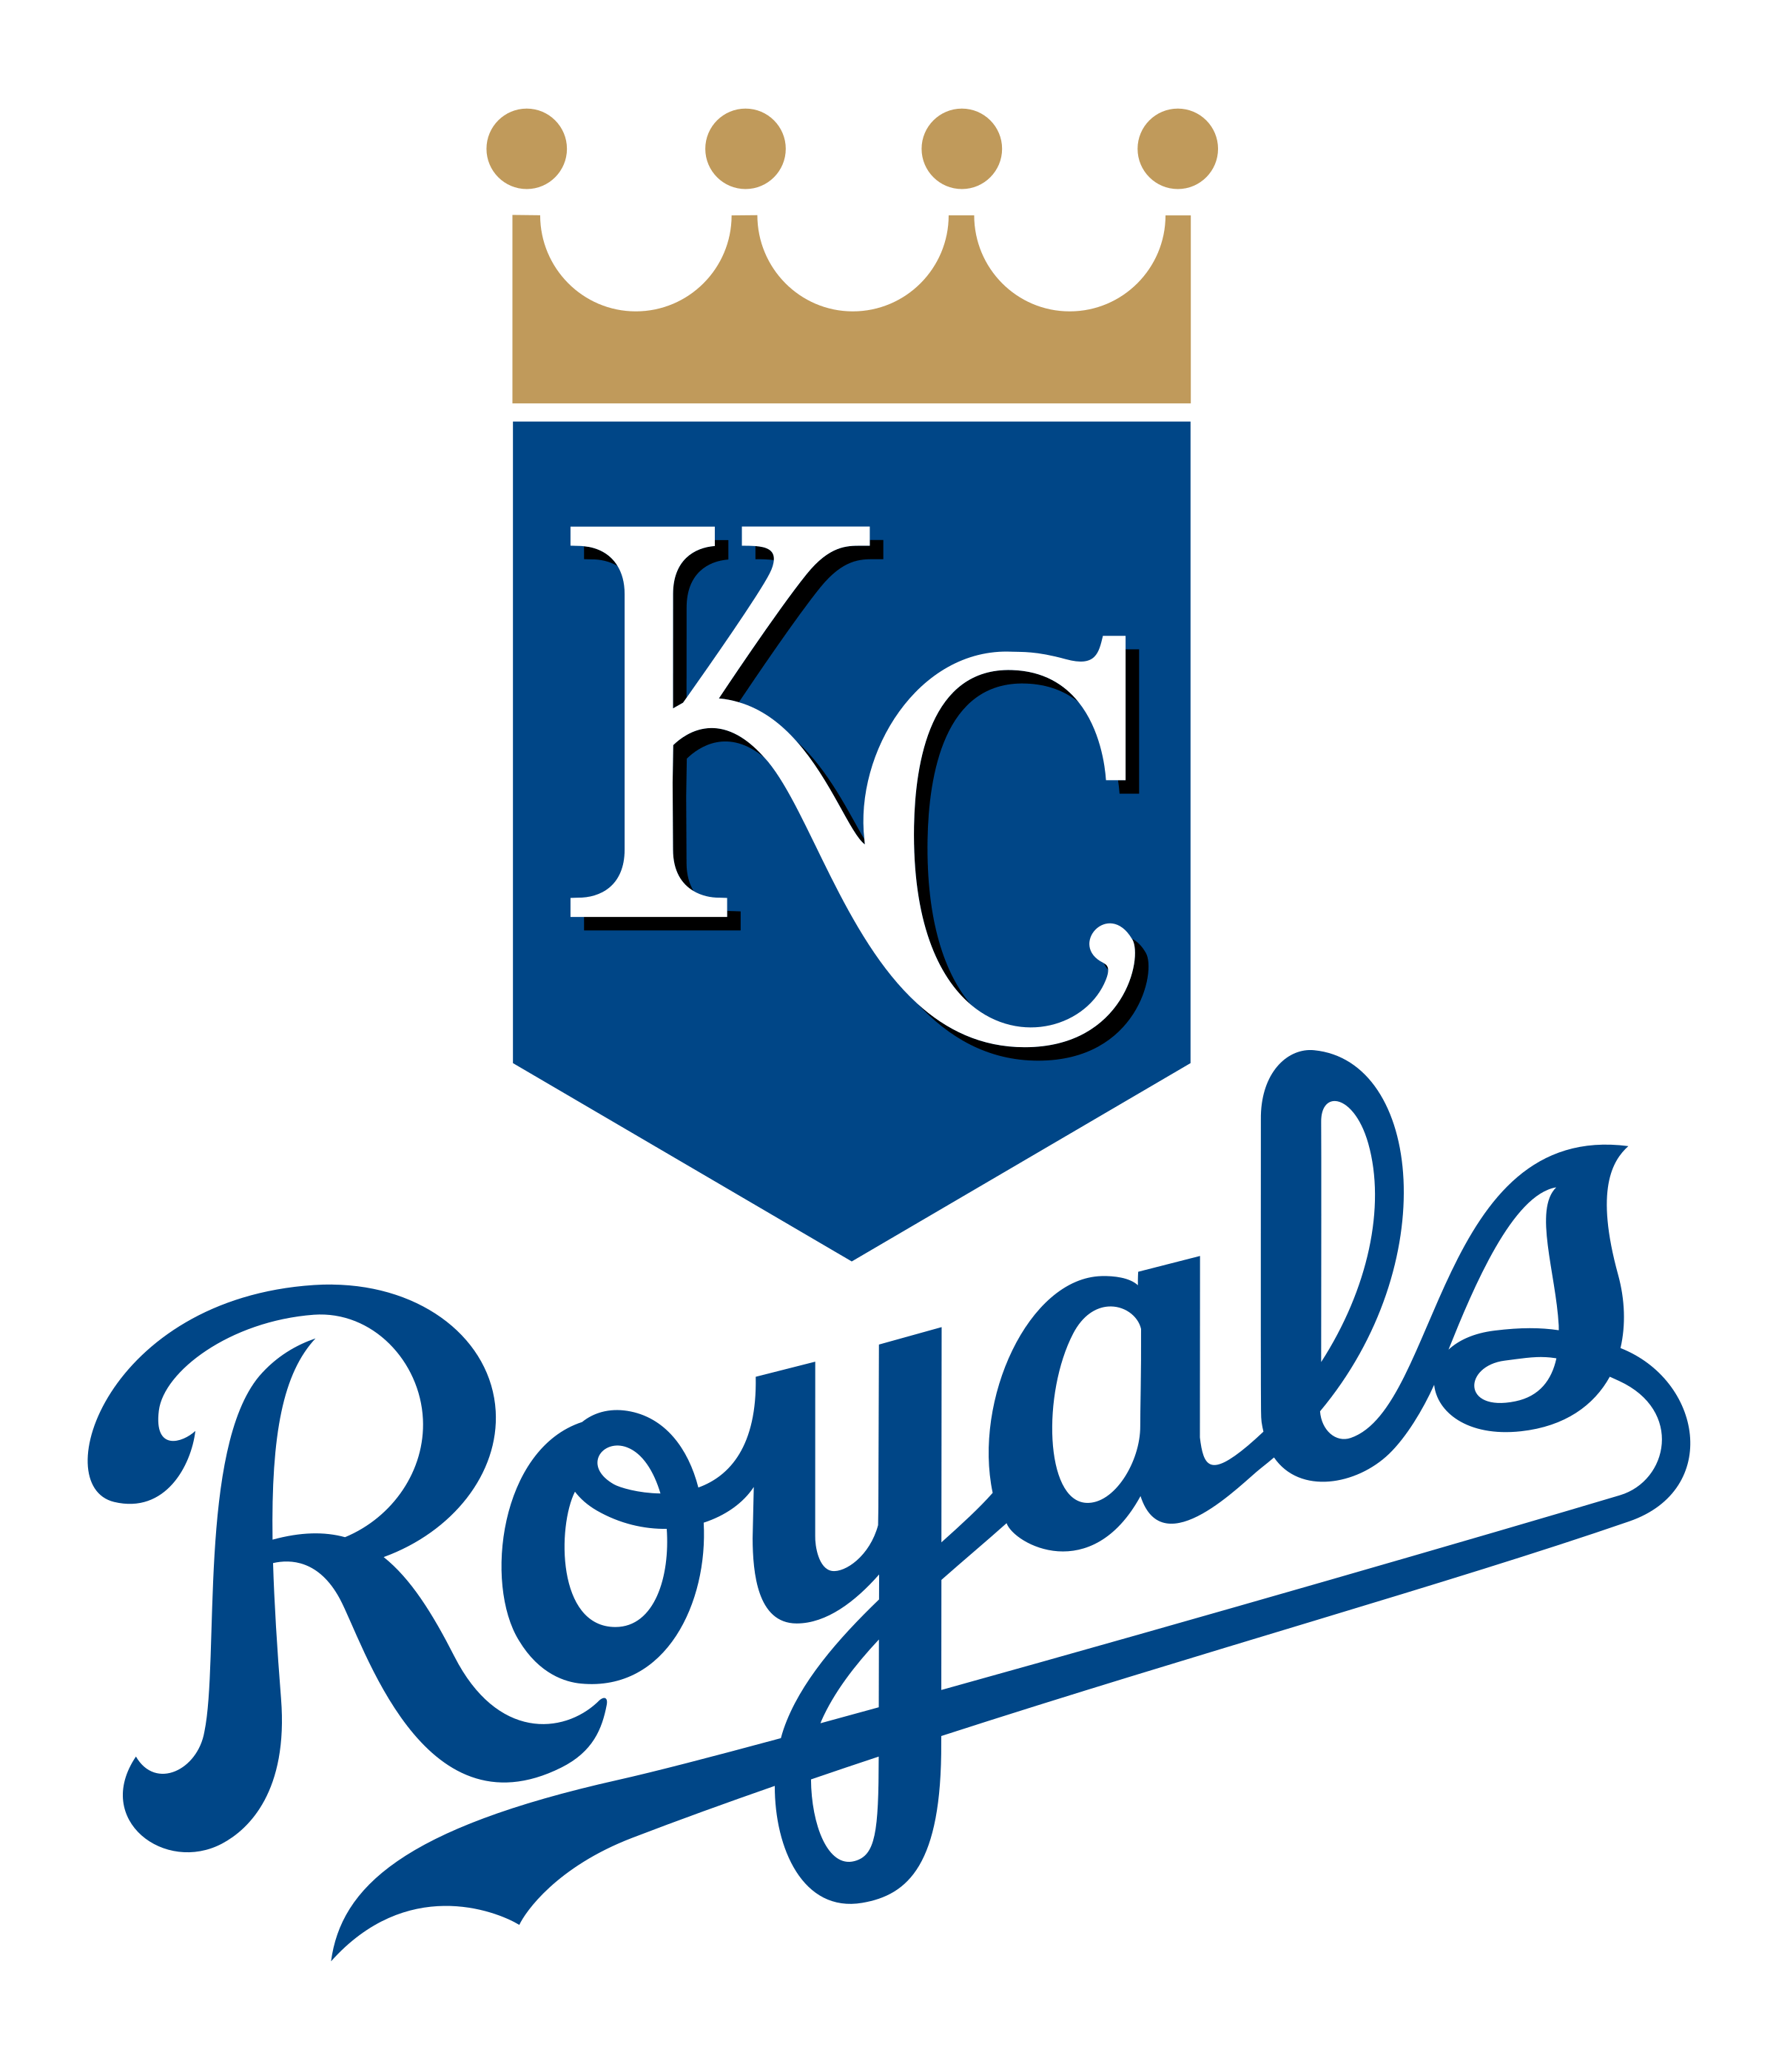 Royals Logo - Kansas City Royals Logo PNG Transparent & SVG Vector - Freebie Supply